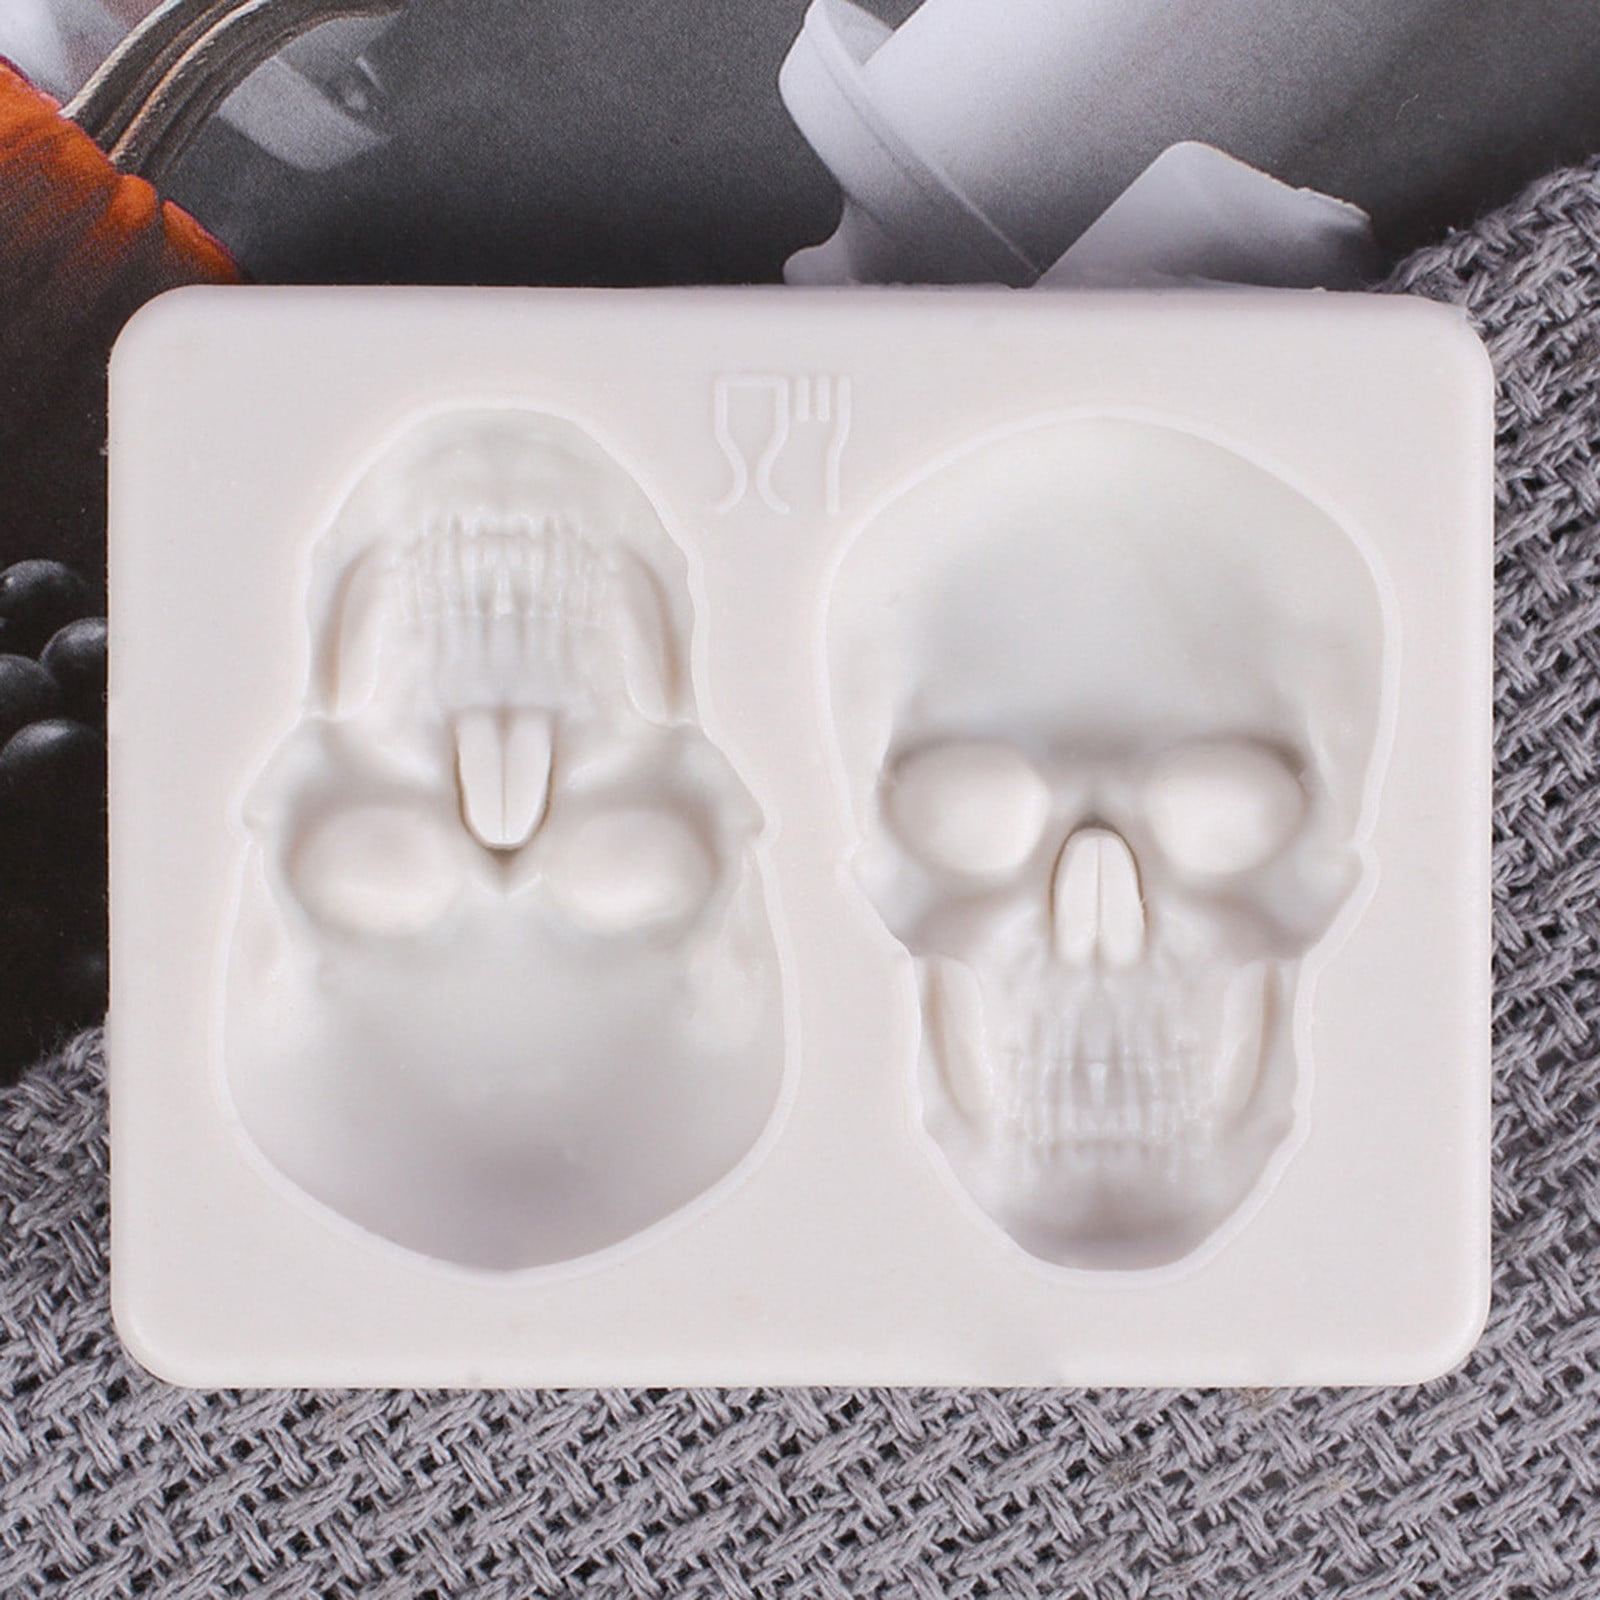 Skeleton Chocolate Molds, 3d 32 Cavities Silicone Mold, Mini Skull